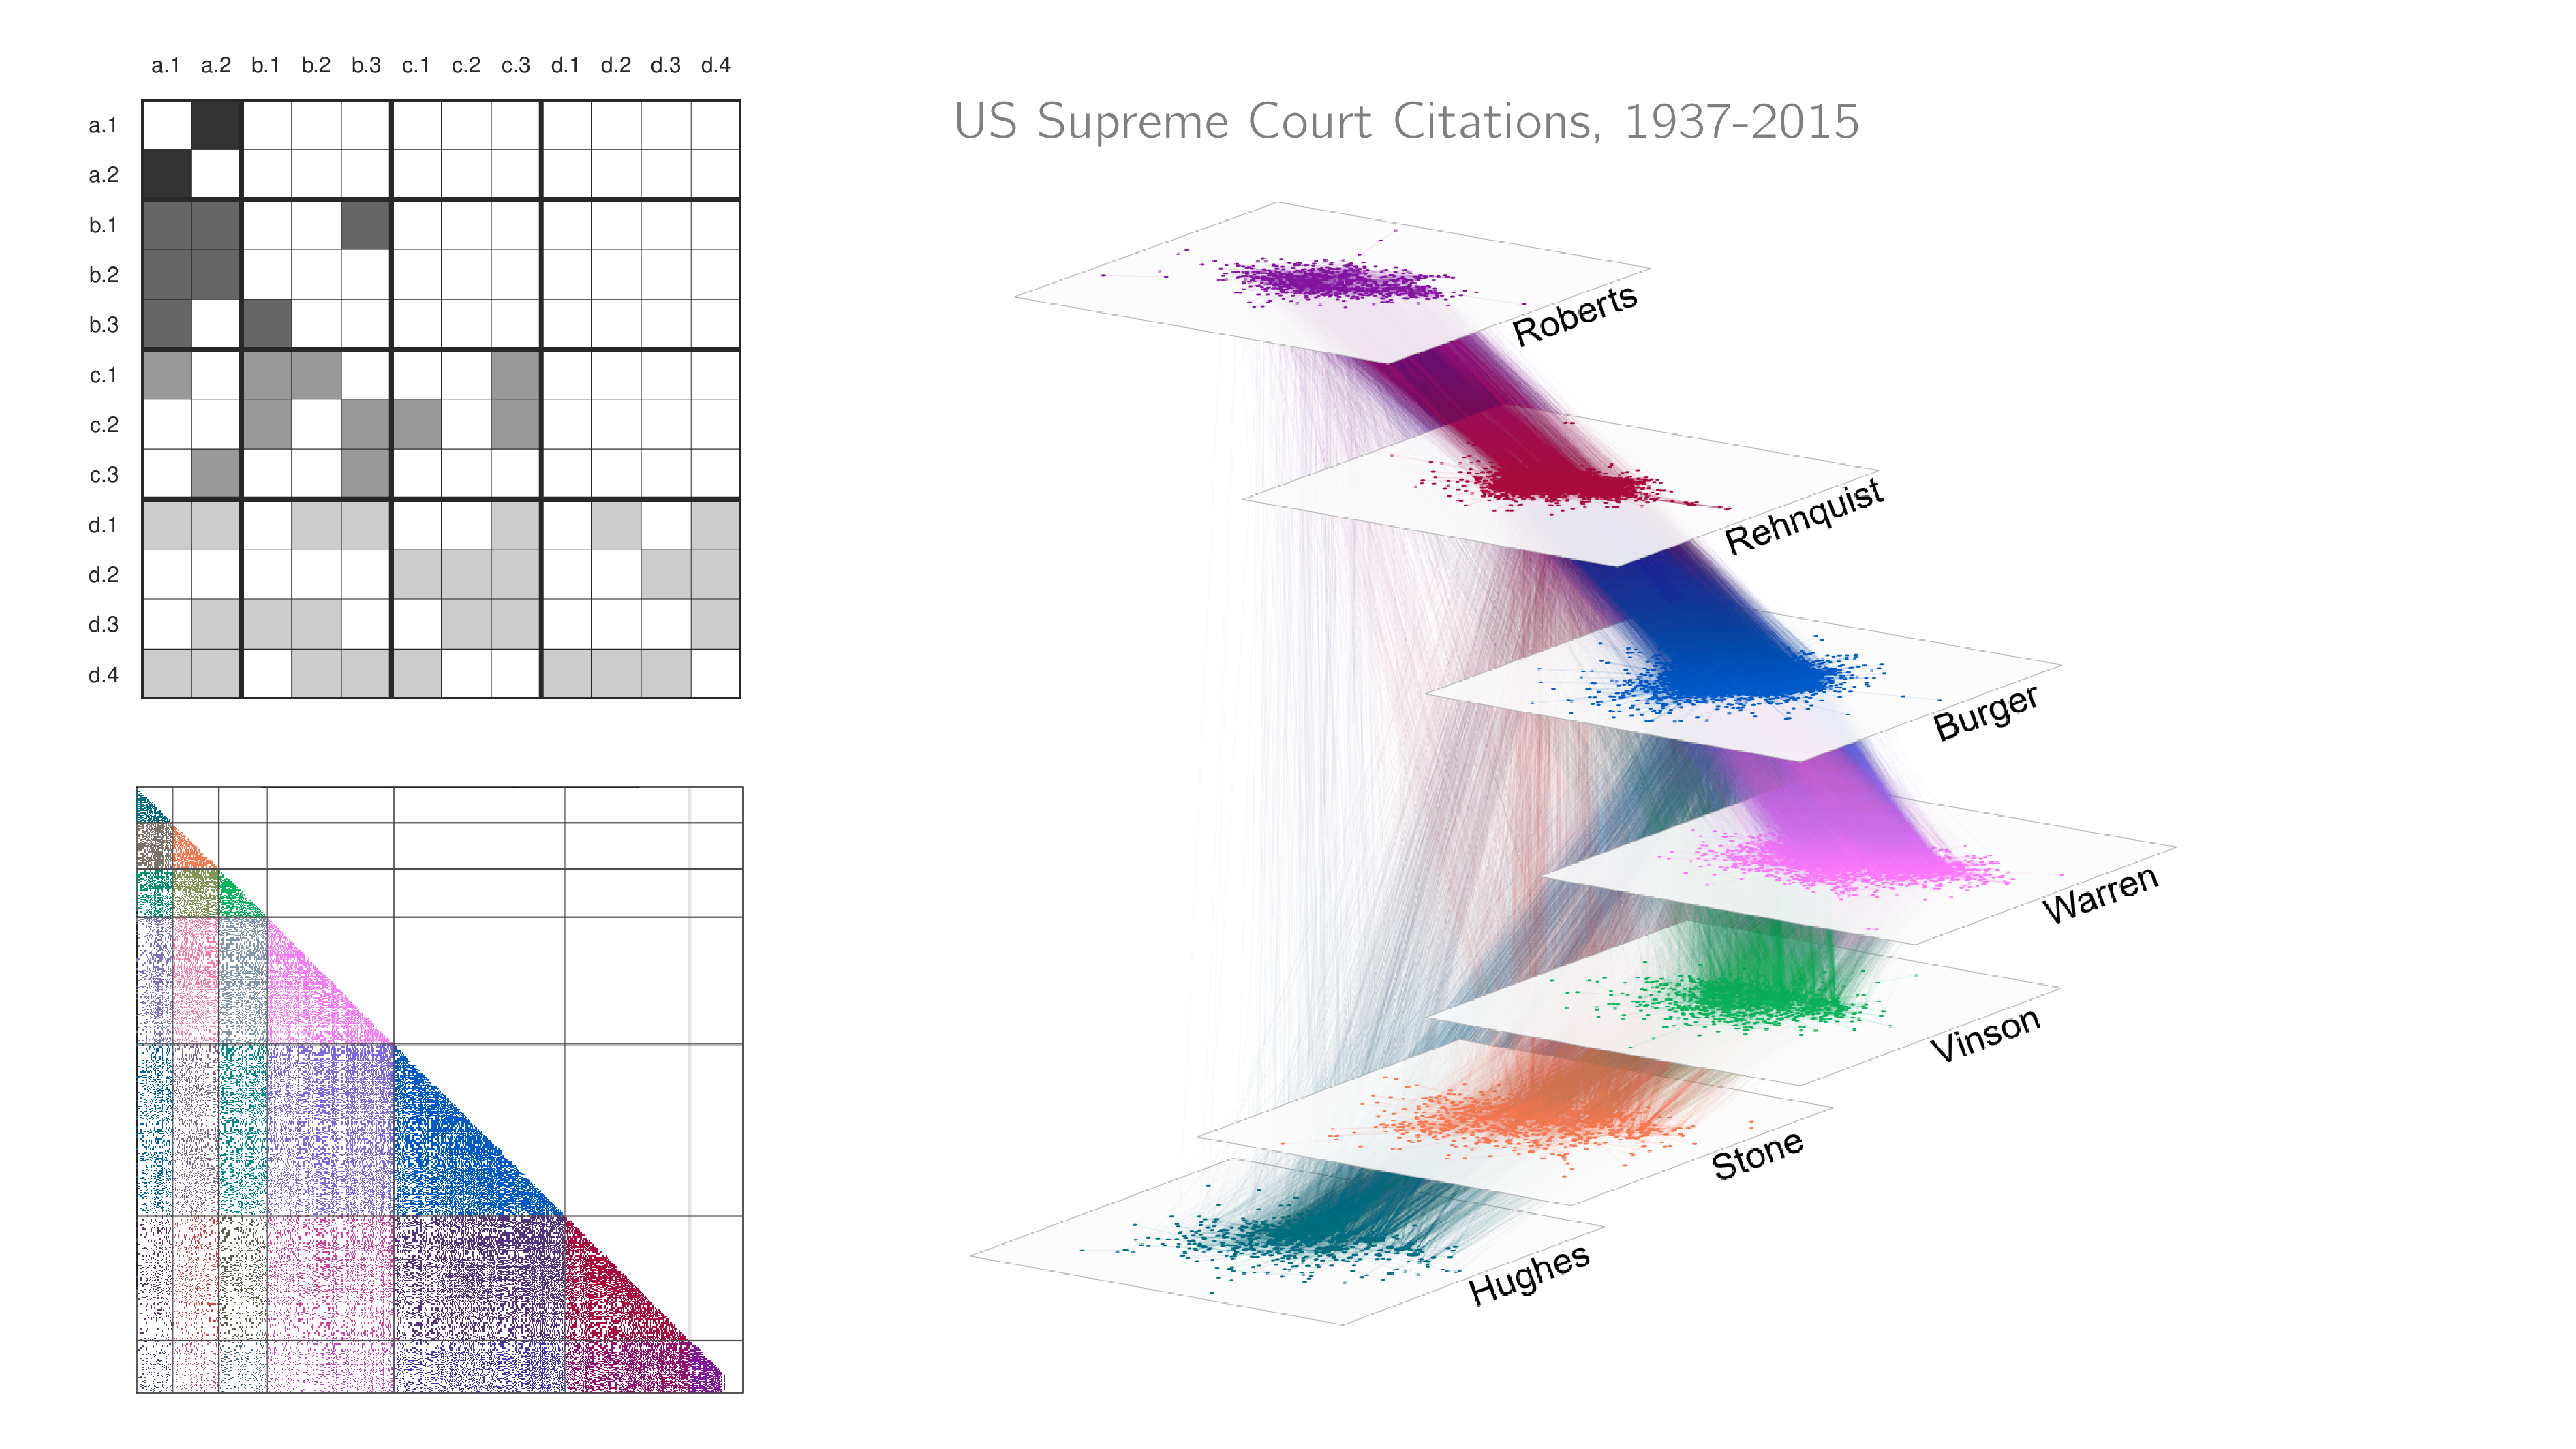 US Supreme Court citation network, 1937-2015.